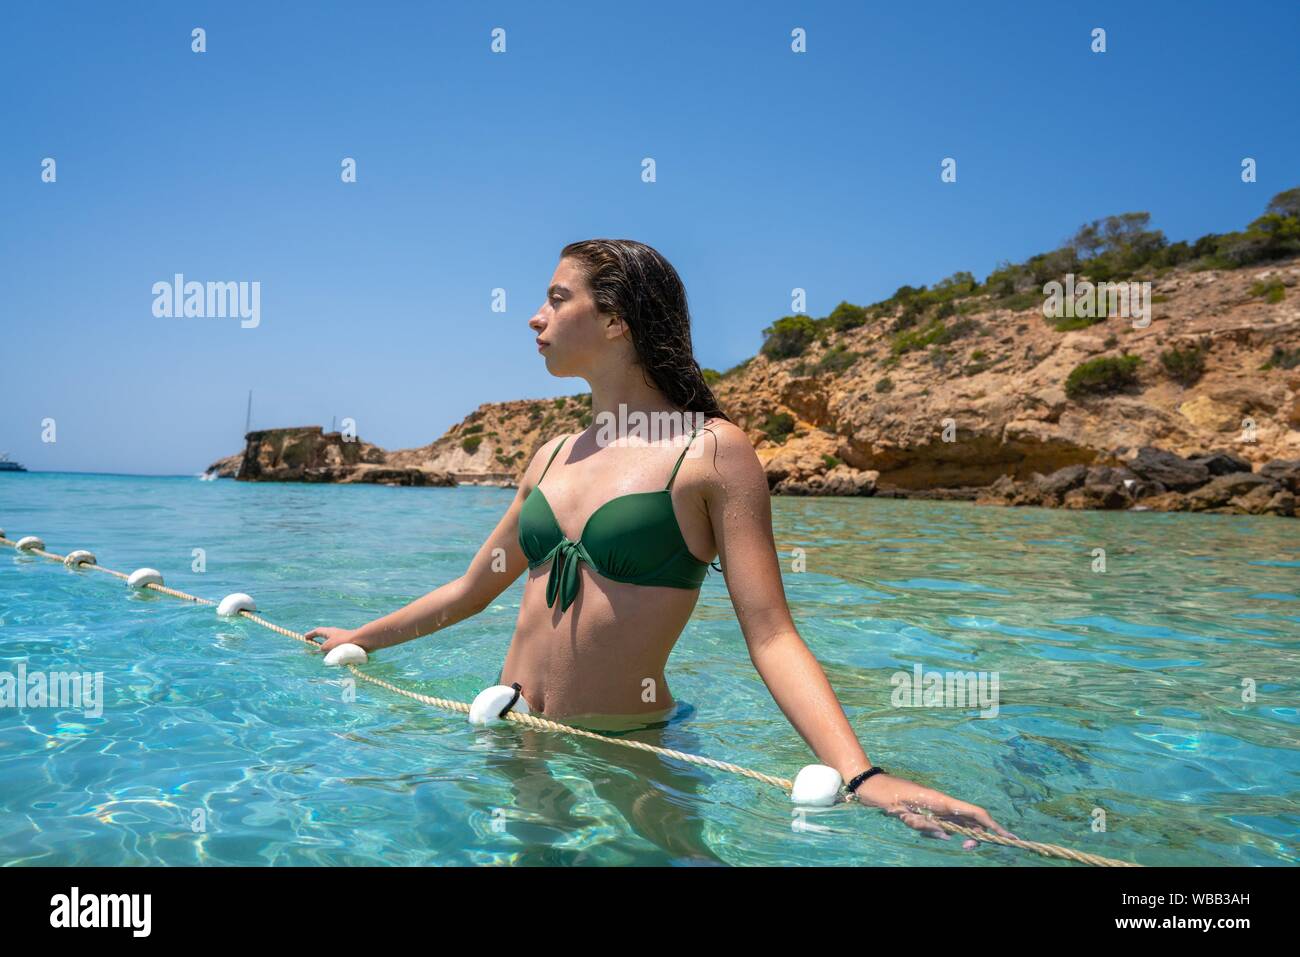 Ibiza bikini girl relaxed in clear water beach of Balearic Islands. Stock Photo